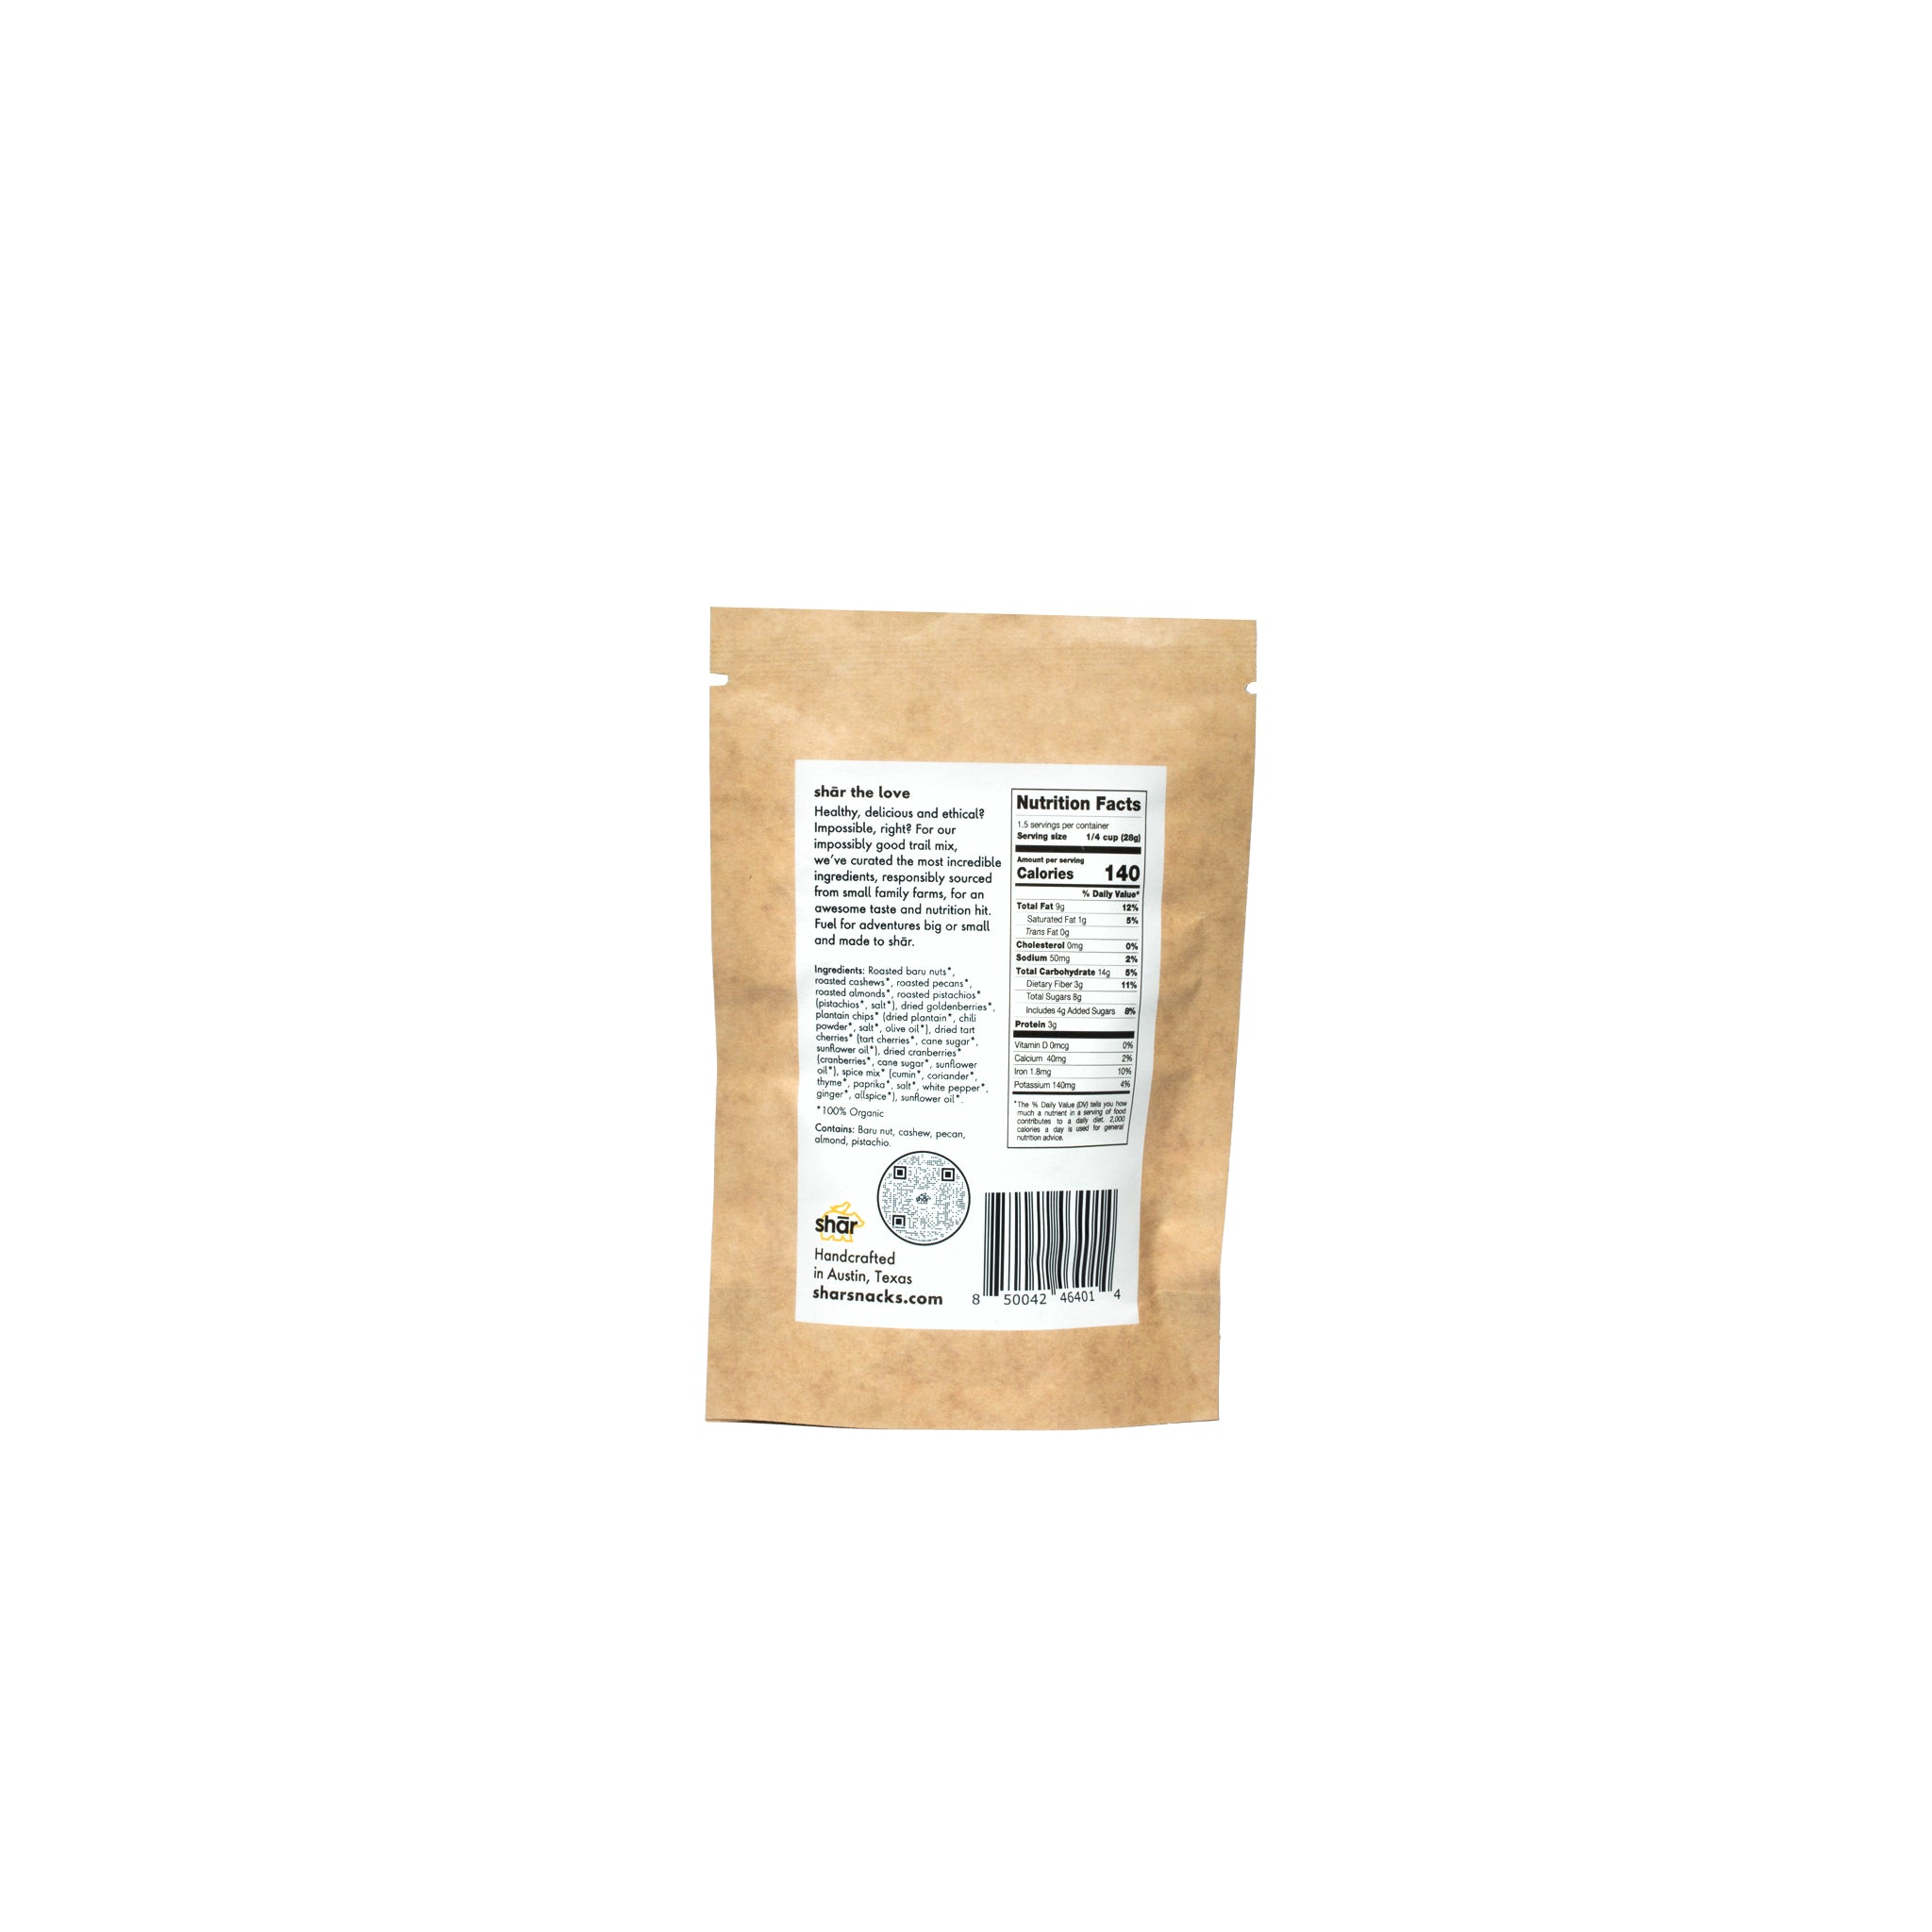 1.5 oz organic shār mini x 6 pack – assorted – Savory, Original, Tropical